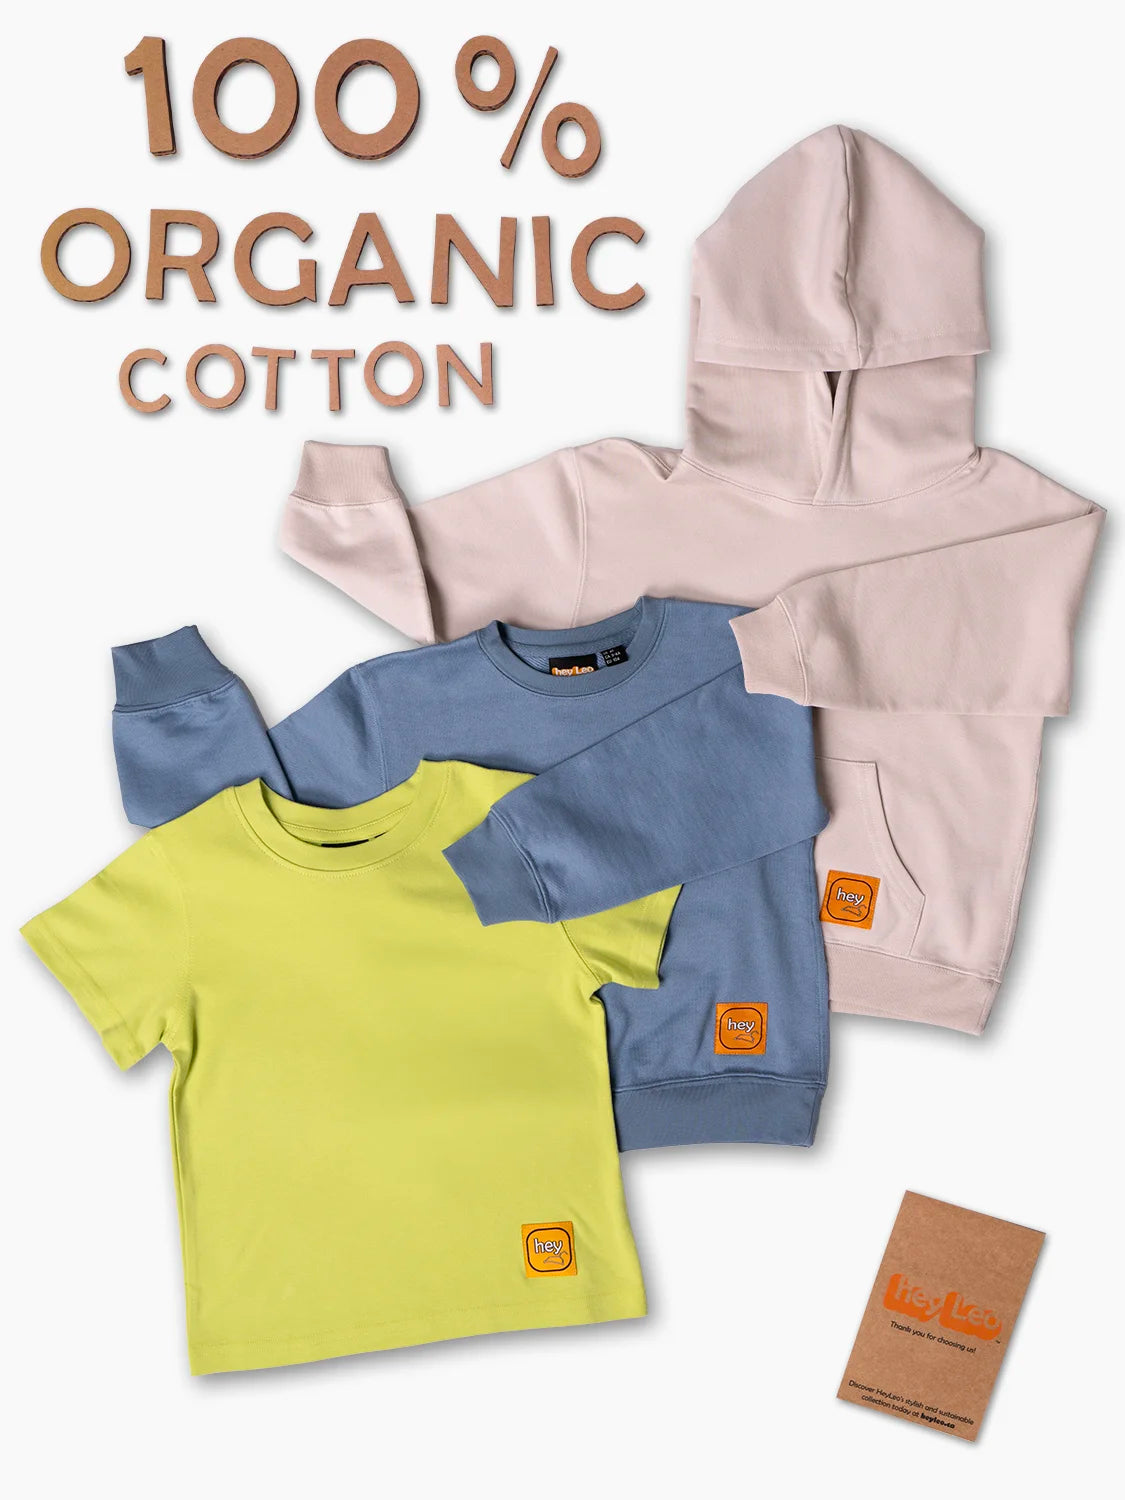 100% Organic Cotton 3-piece Outfit Set Light Gray/Multicolor